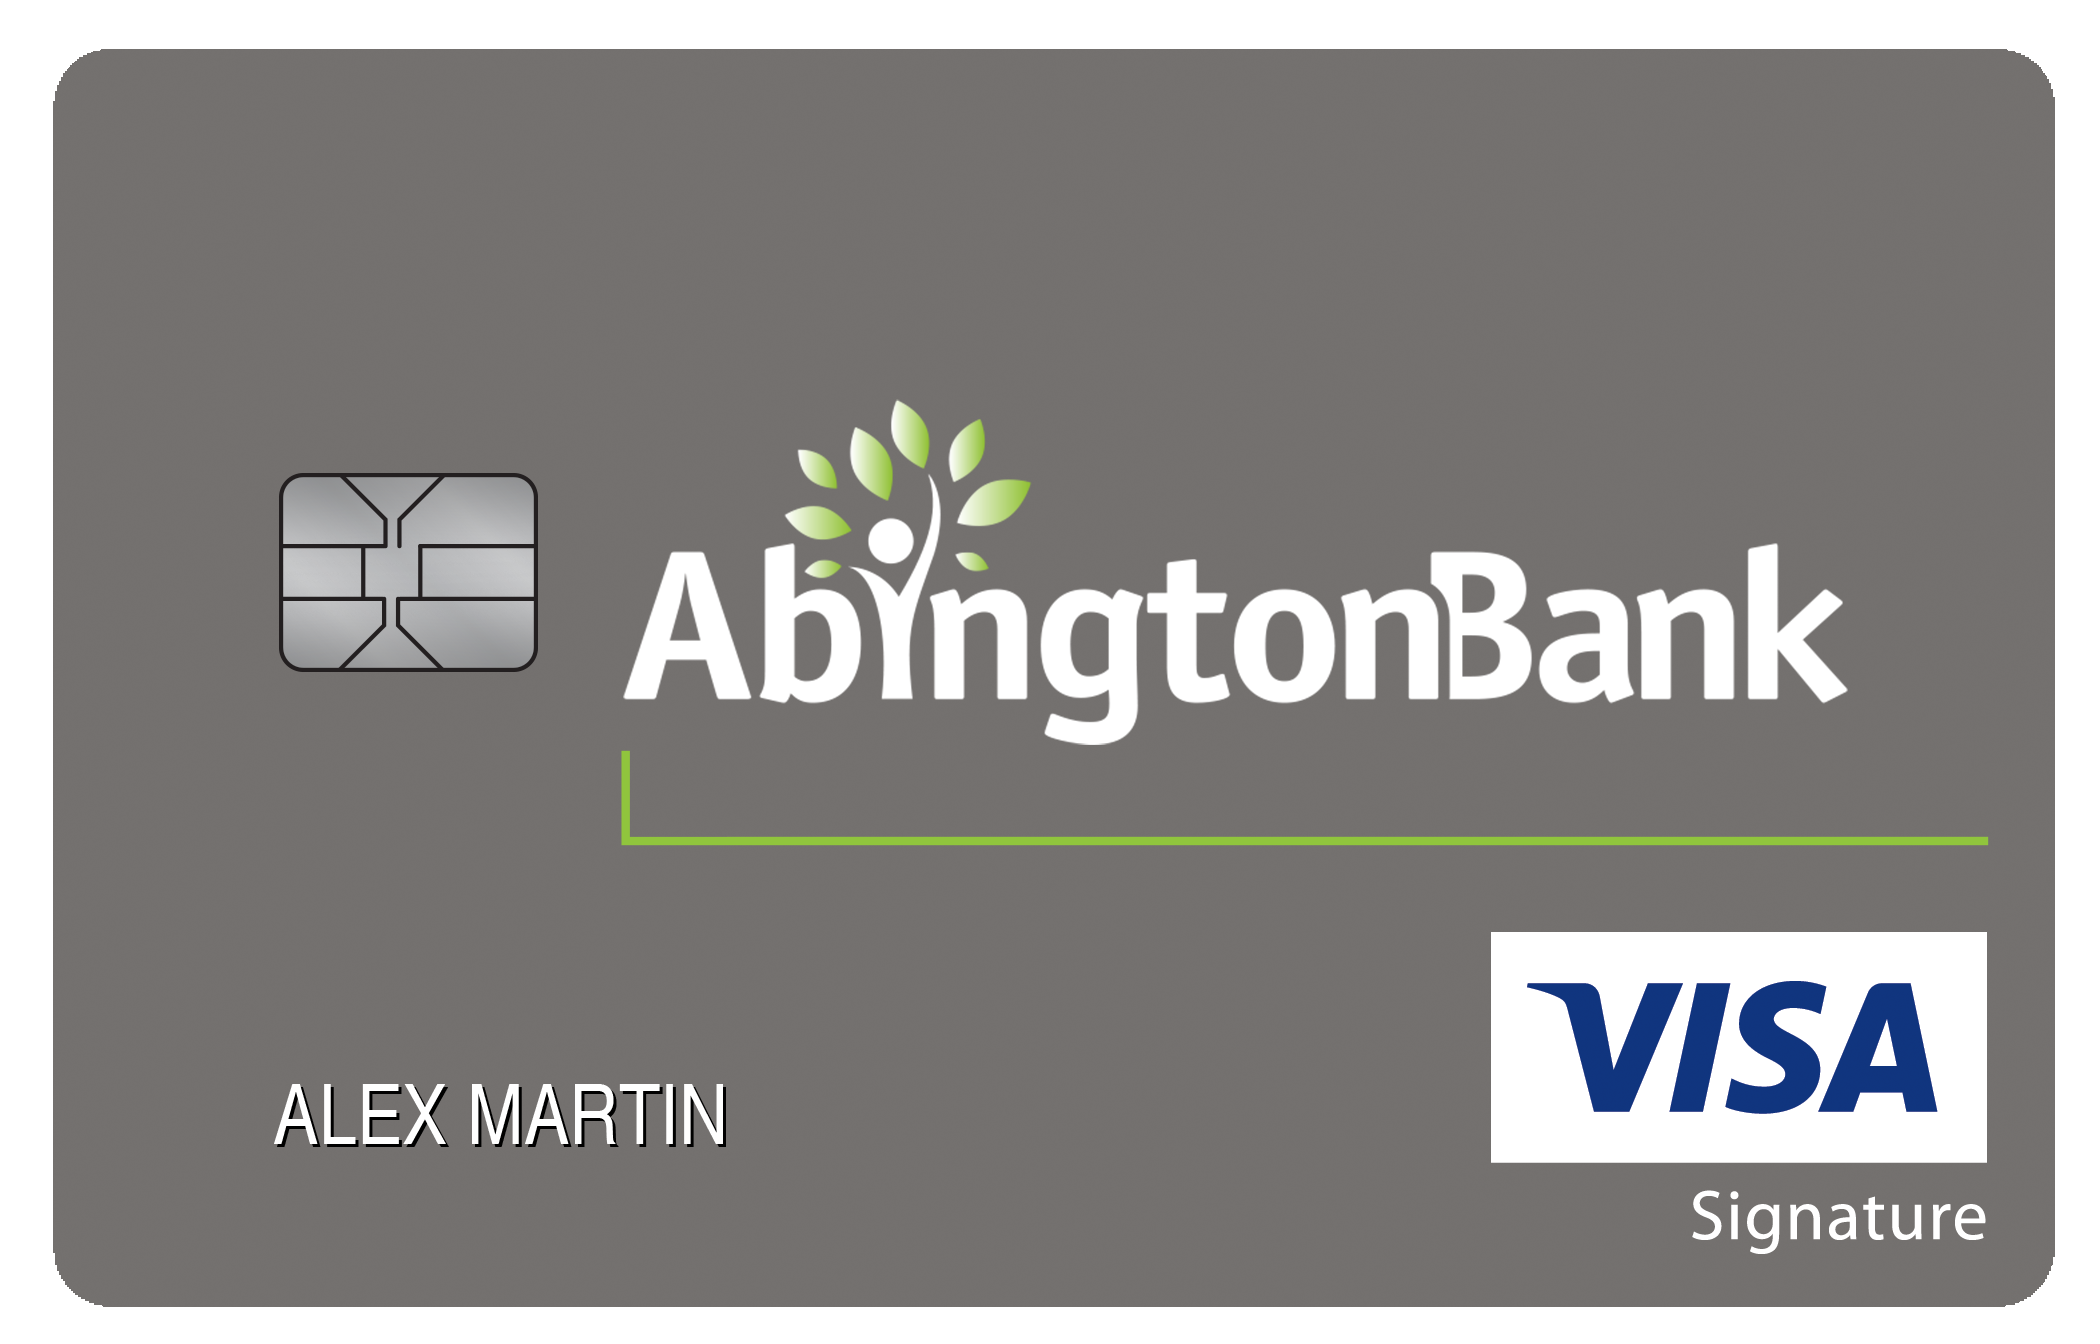 Abington Bank Travel Rewards+ Card